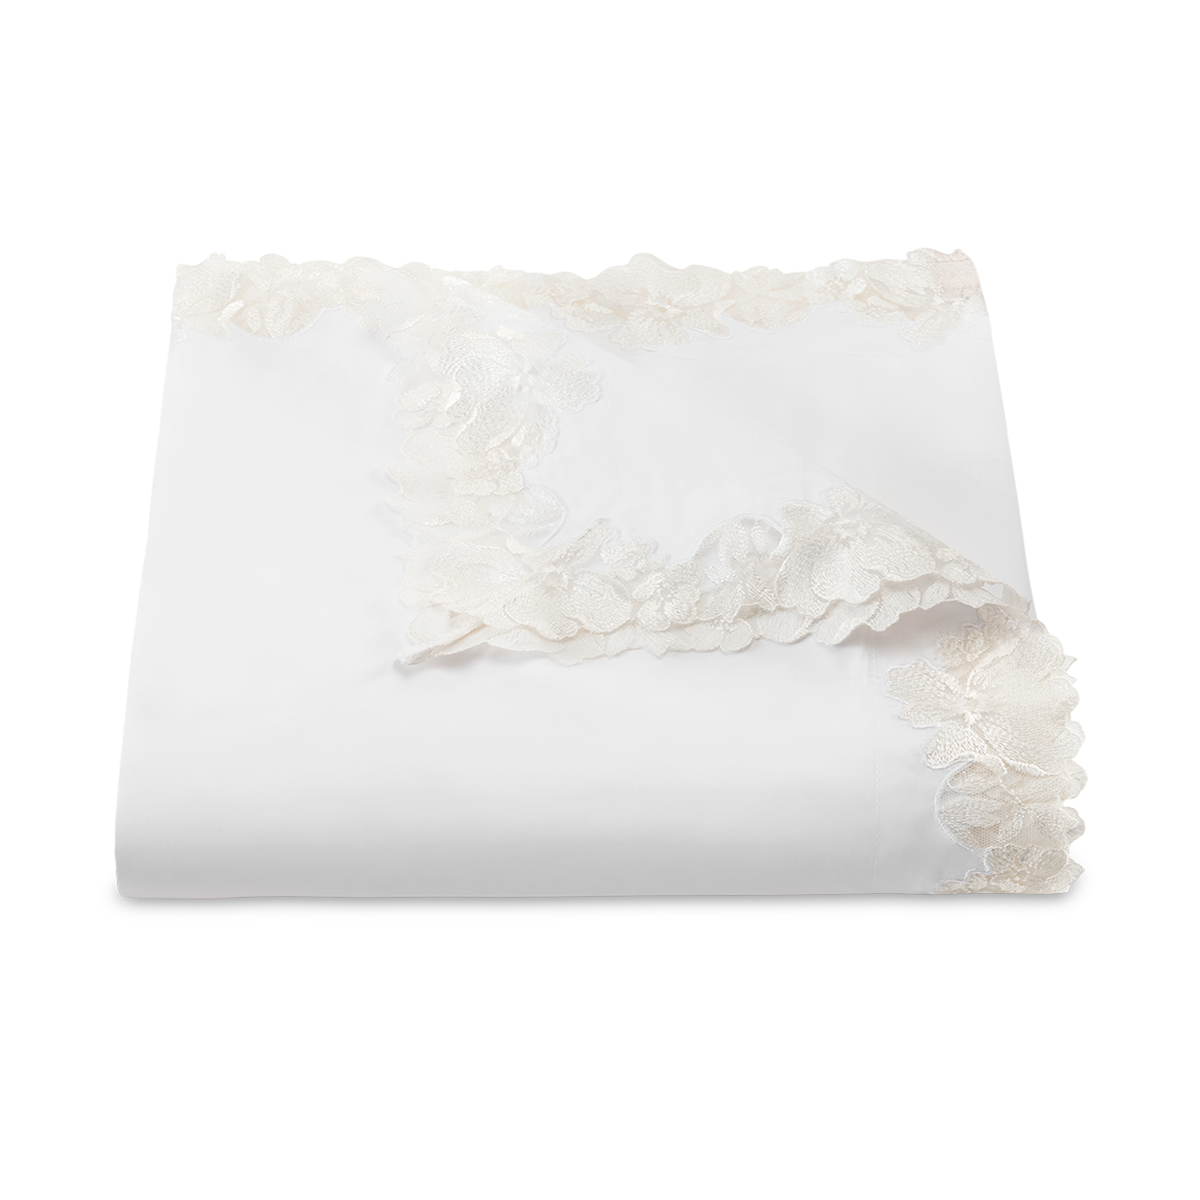 Duvet Cover of Matouk Virginia Bedding in Color White